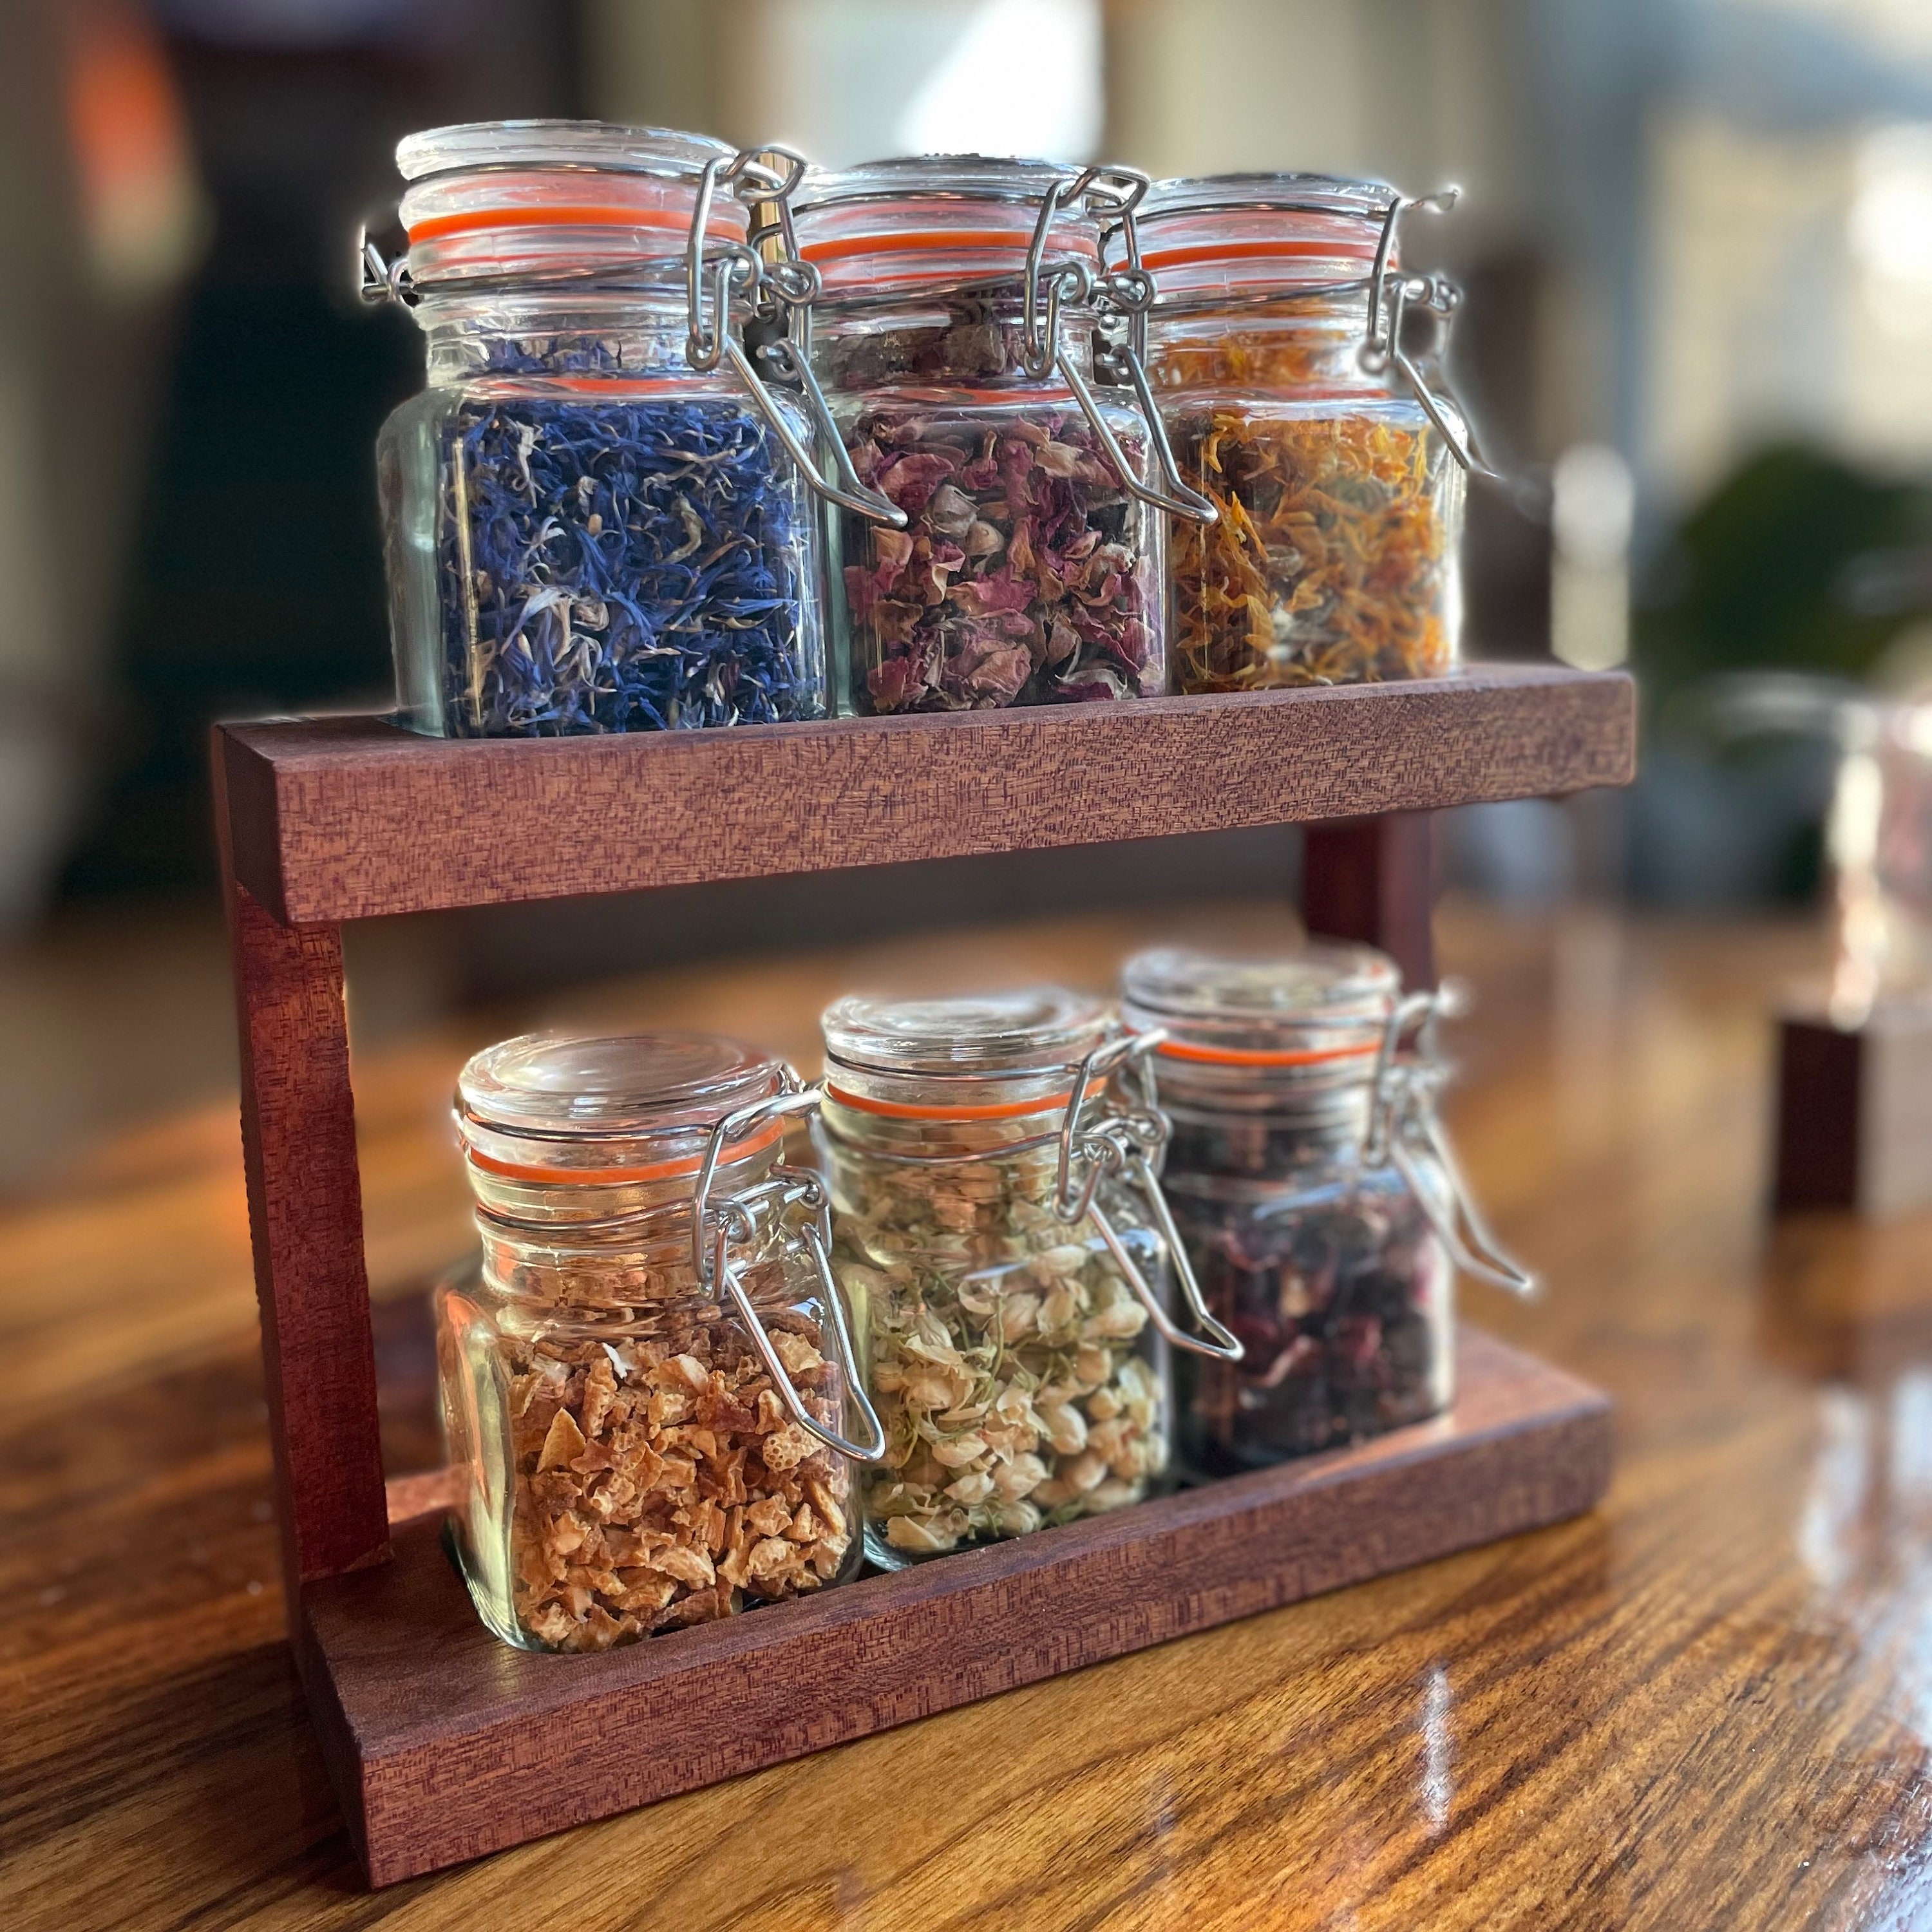 Set of 6 Spice Jars With Wooden Lids 150ml Mini Glass Storage Jars for Spice  Racks, Kitchen Cabinets, Storage & Storage 